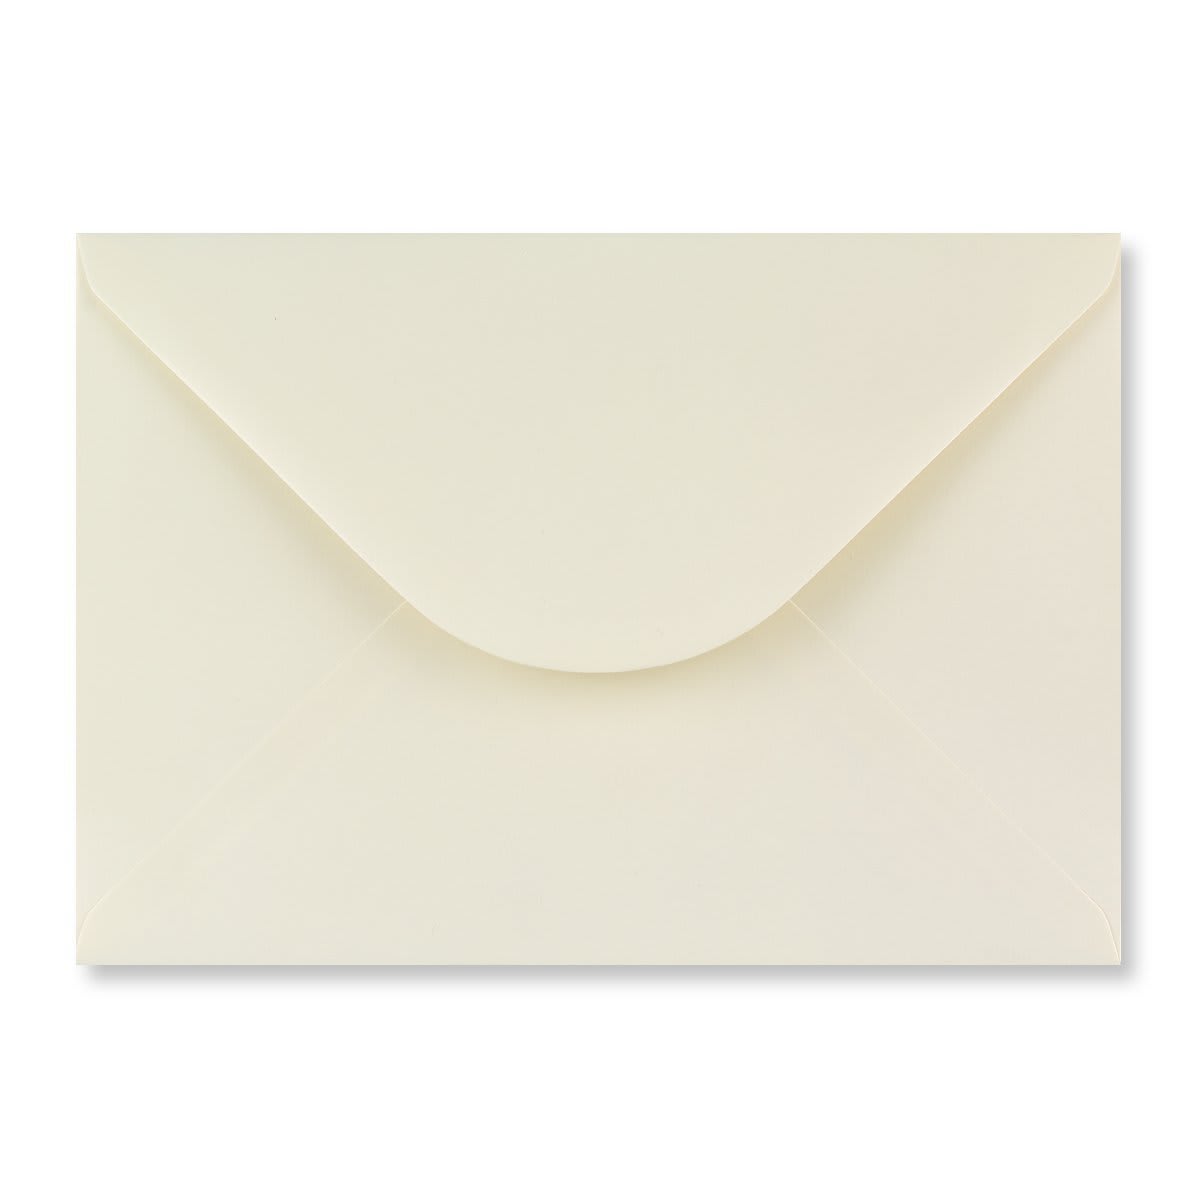 Ivory 184 x 285mm Envelopes 100gsm